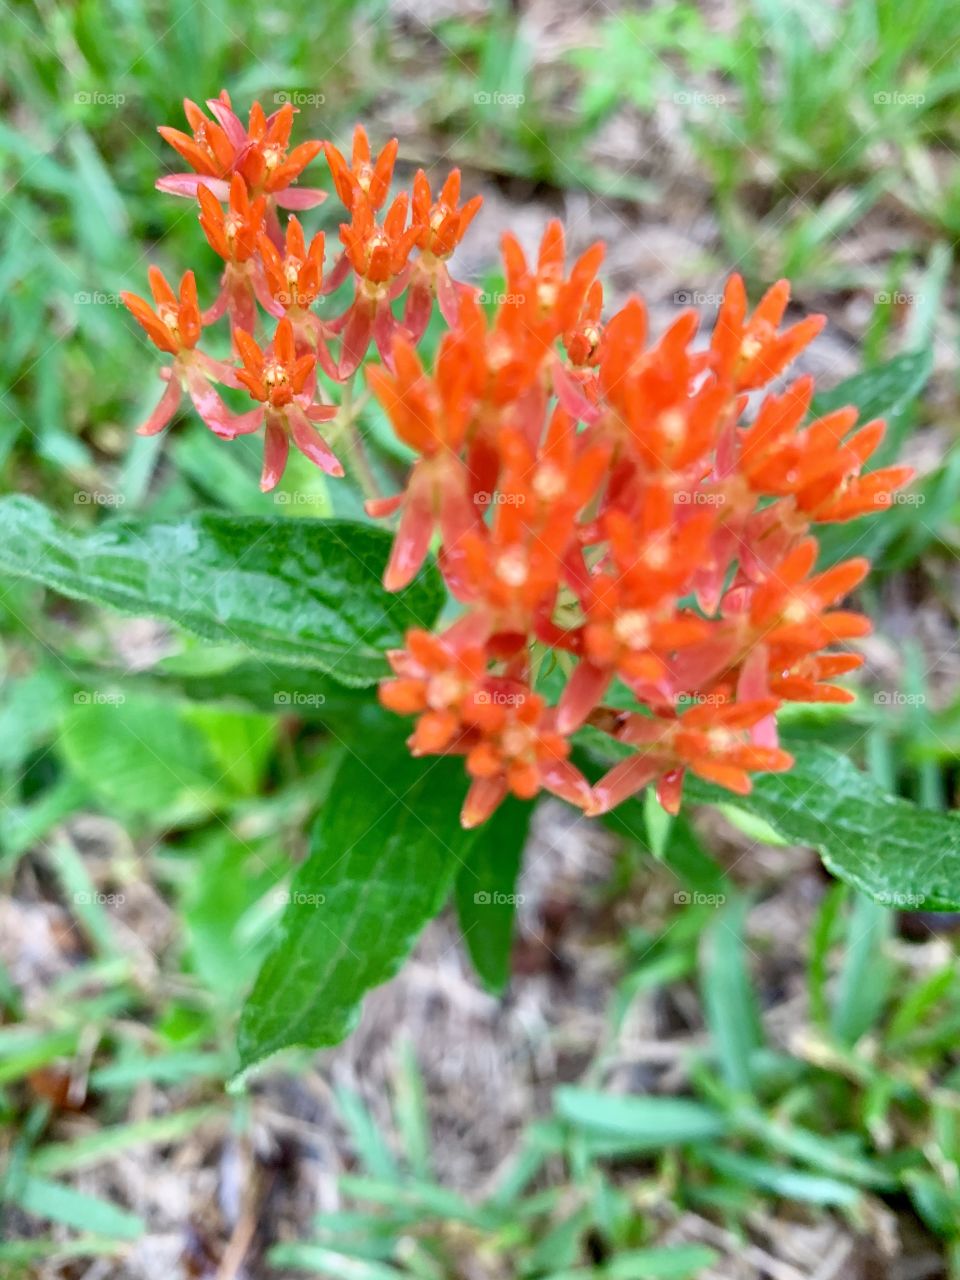 Florida flower